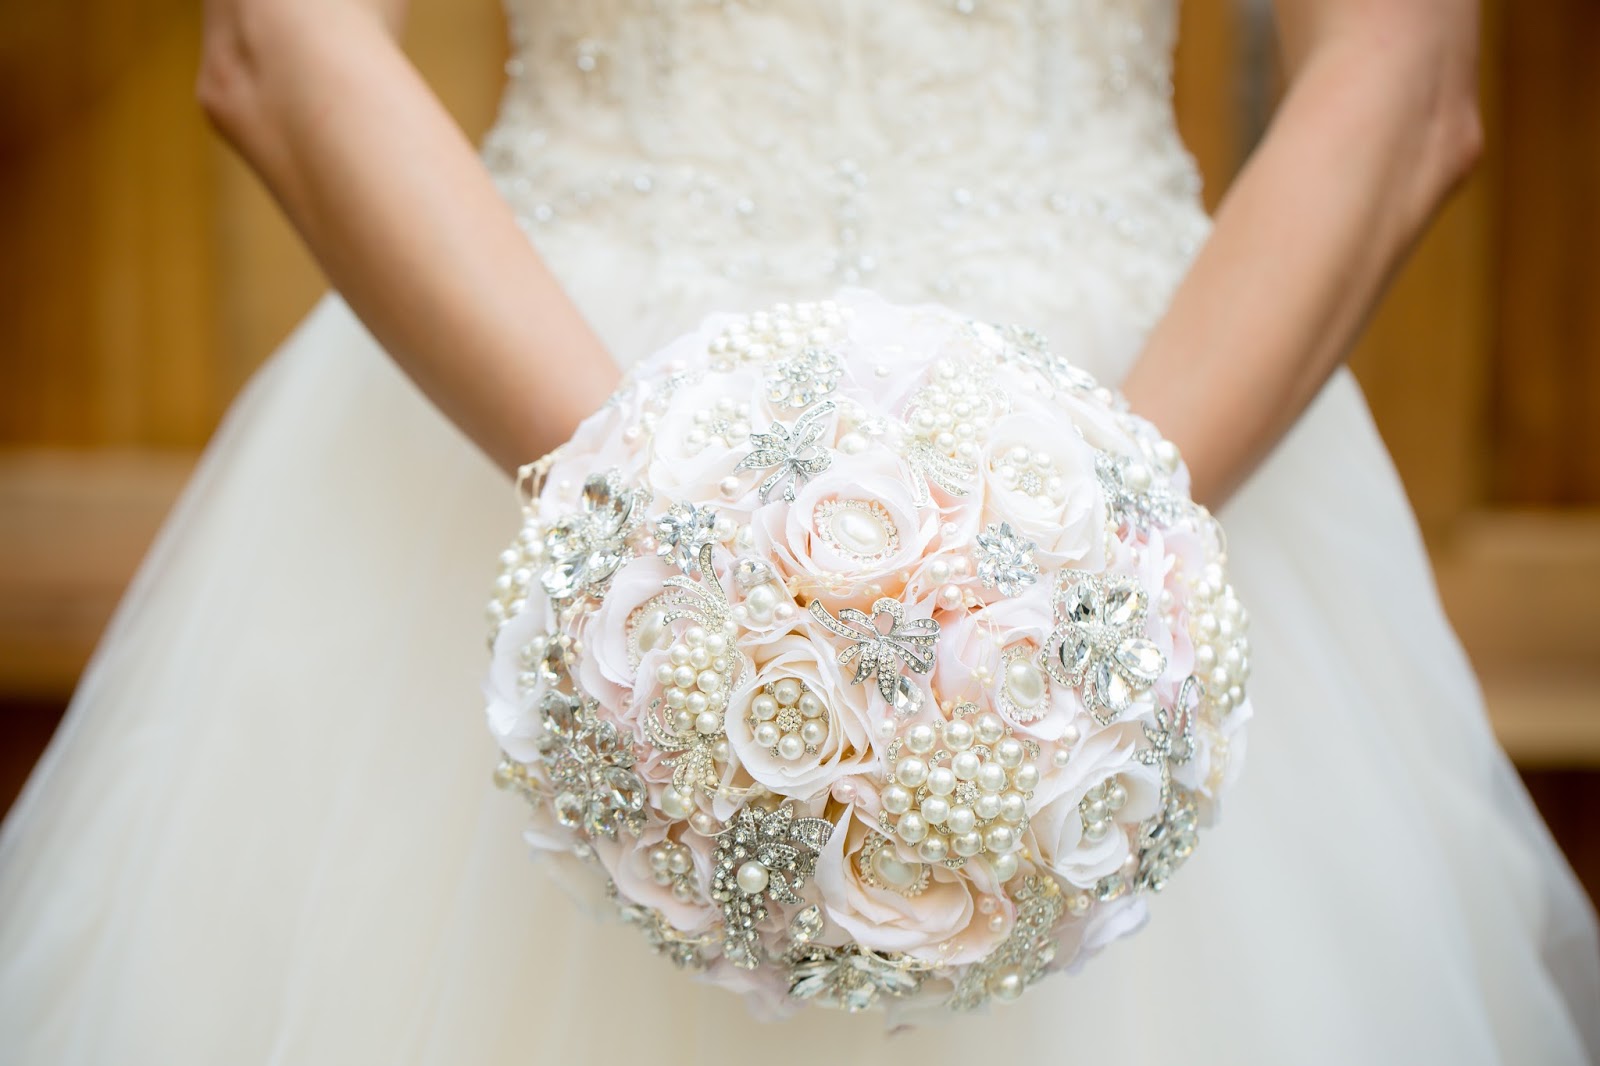 Bride with bouquet 